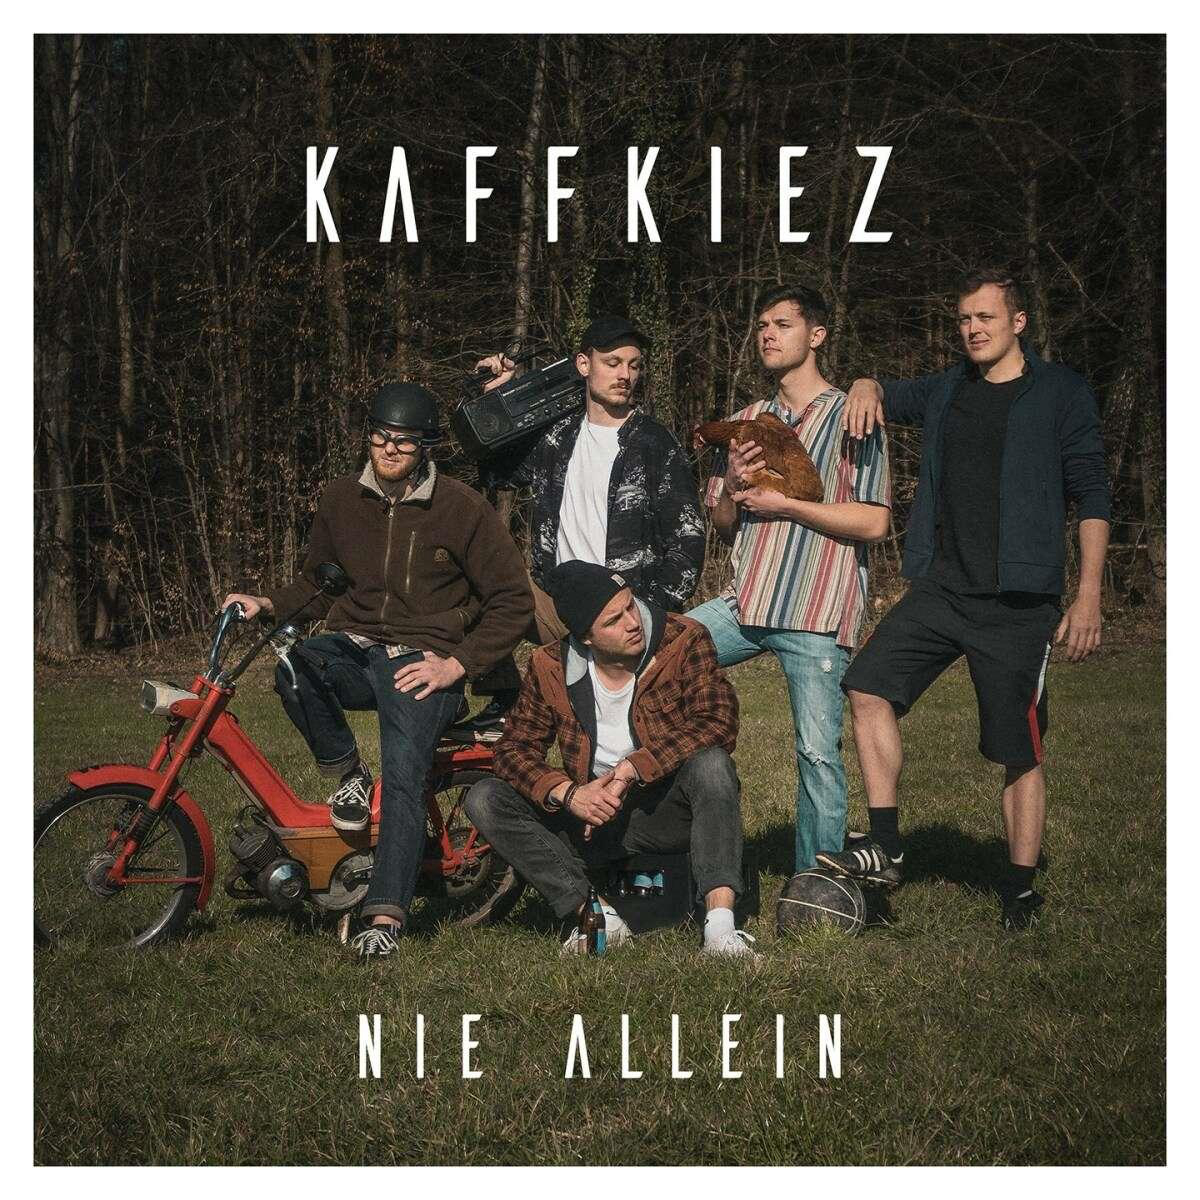 Vinyl) (Vinyl) Nie Kaffkiez Allein - (Black -